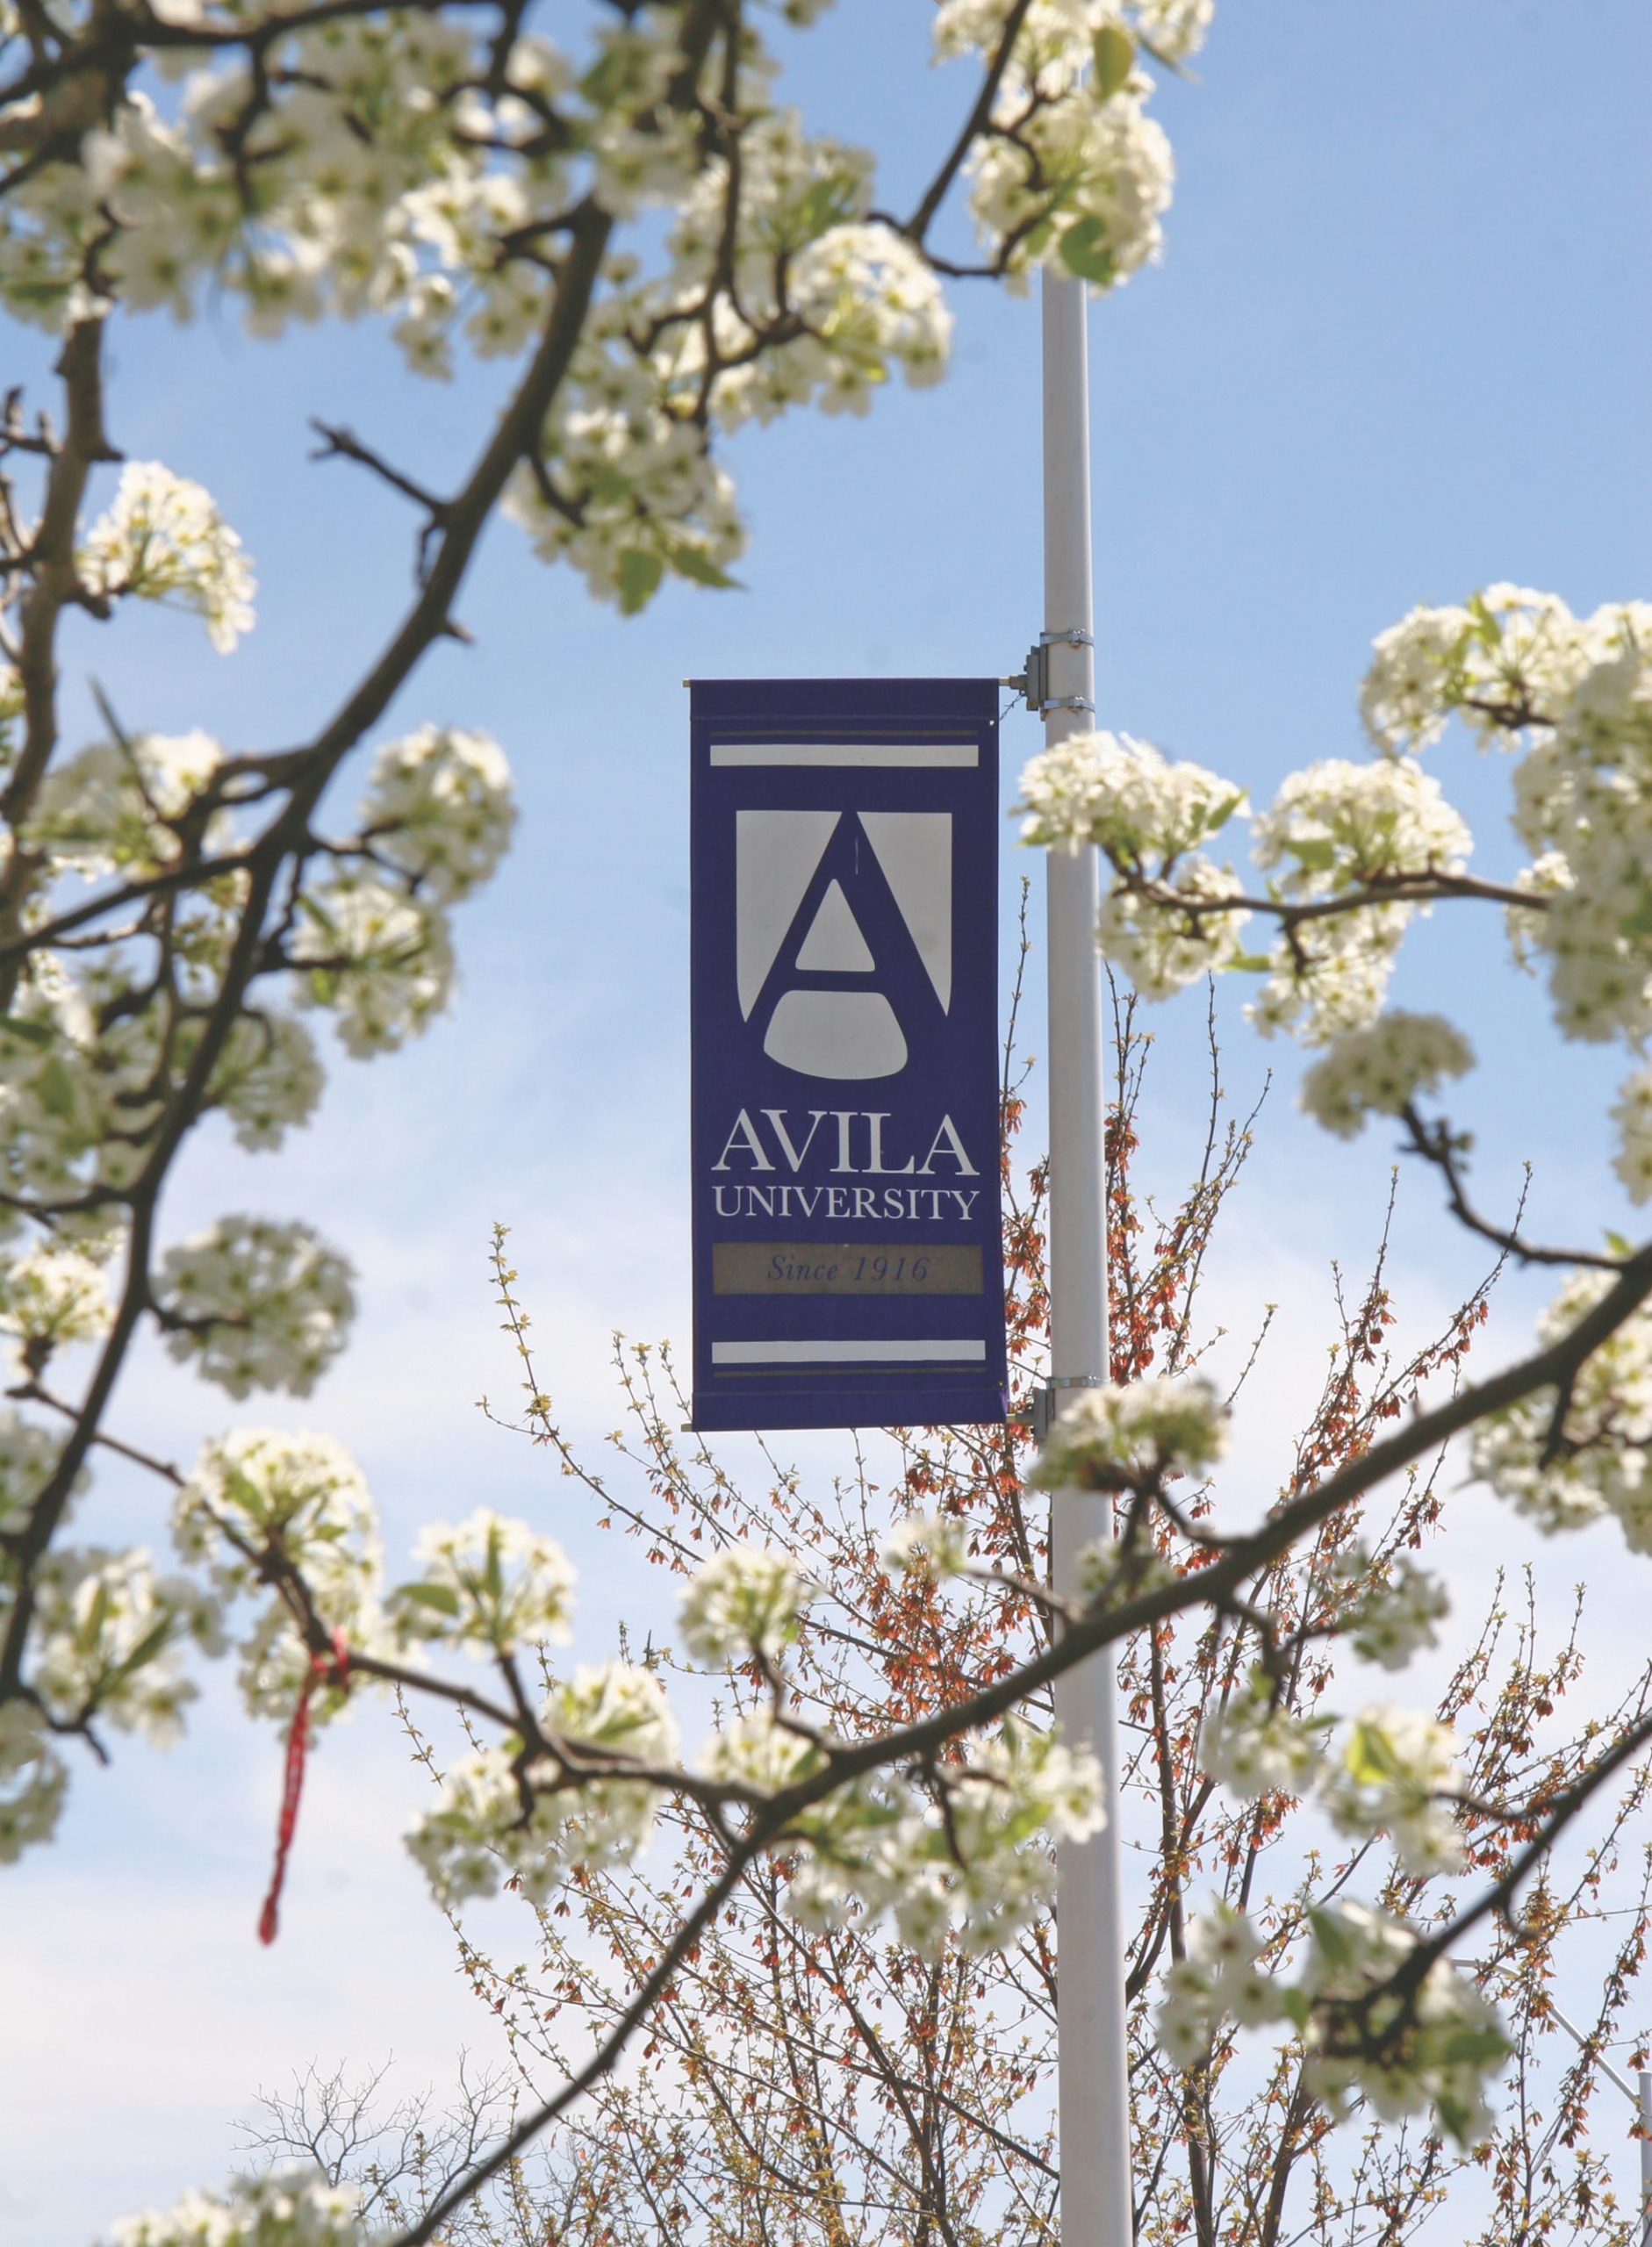 Avila university light pole banner framed by tree blossums